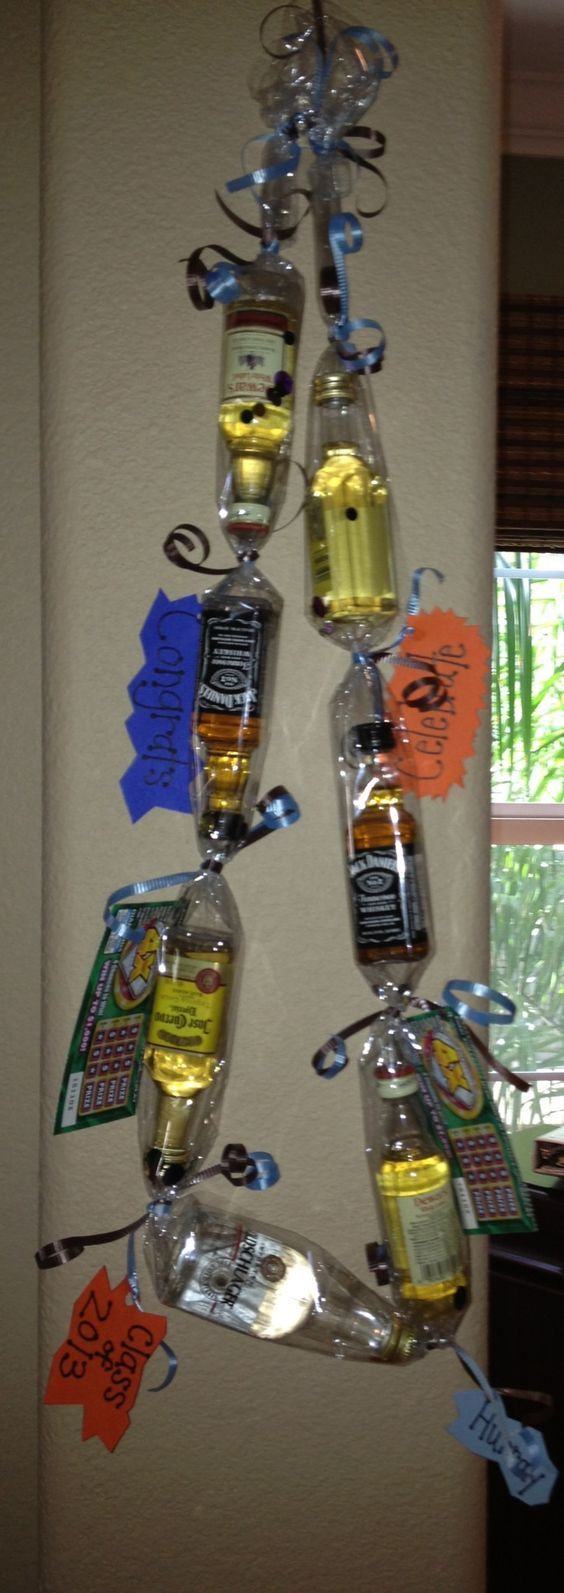 Best ideas about Mini Liquor Bottles Gift Ideas
. Save or Pin 25 best Mini Alcohol Bottles ideas on Pinterest Now.